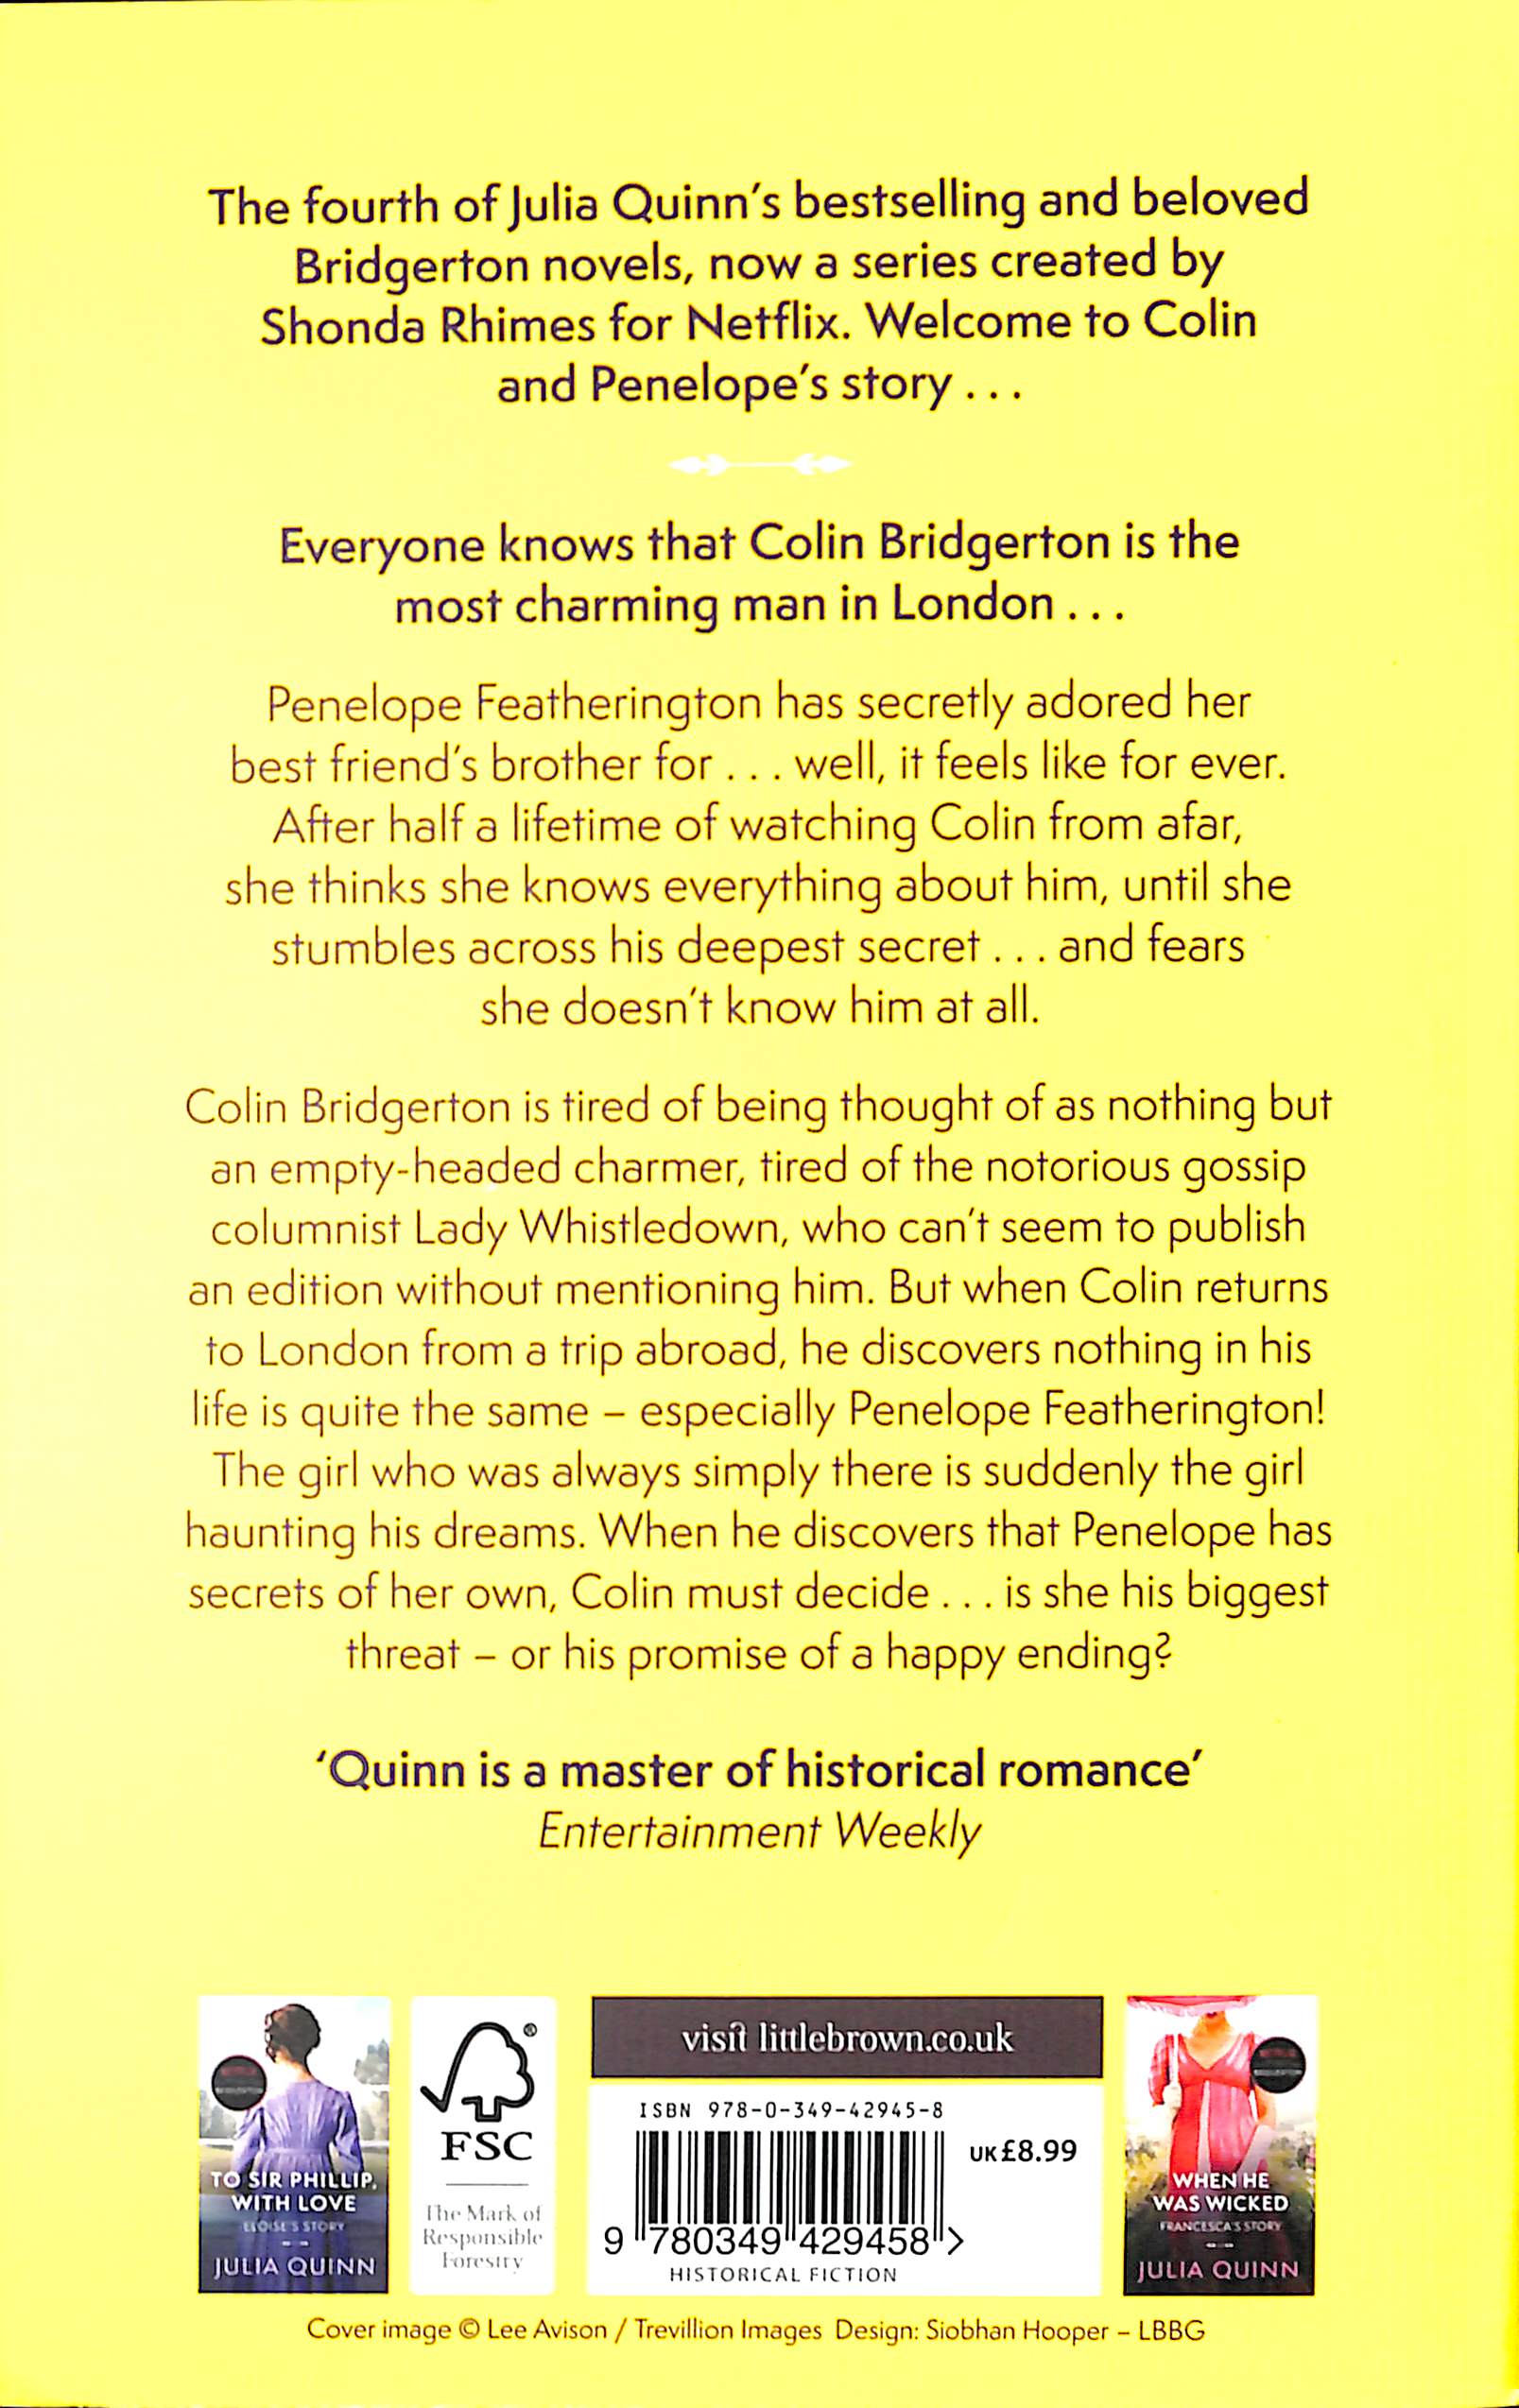 Bridgerton Book 4 Romancing Mr Bridgerton (Penelope & Colins by Julia Quinn